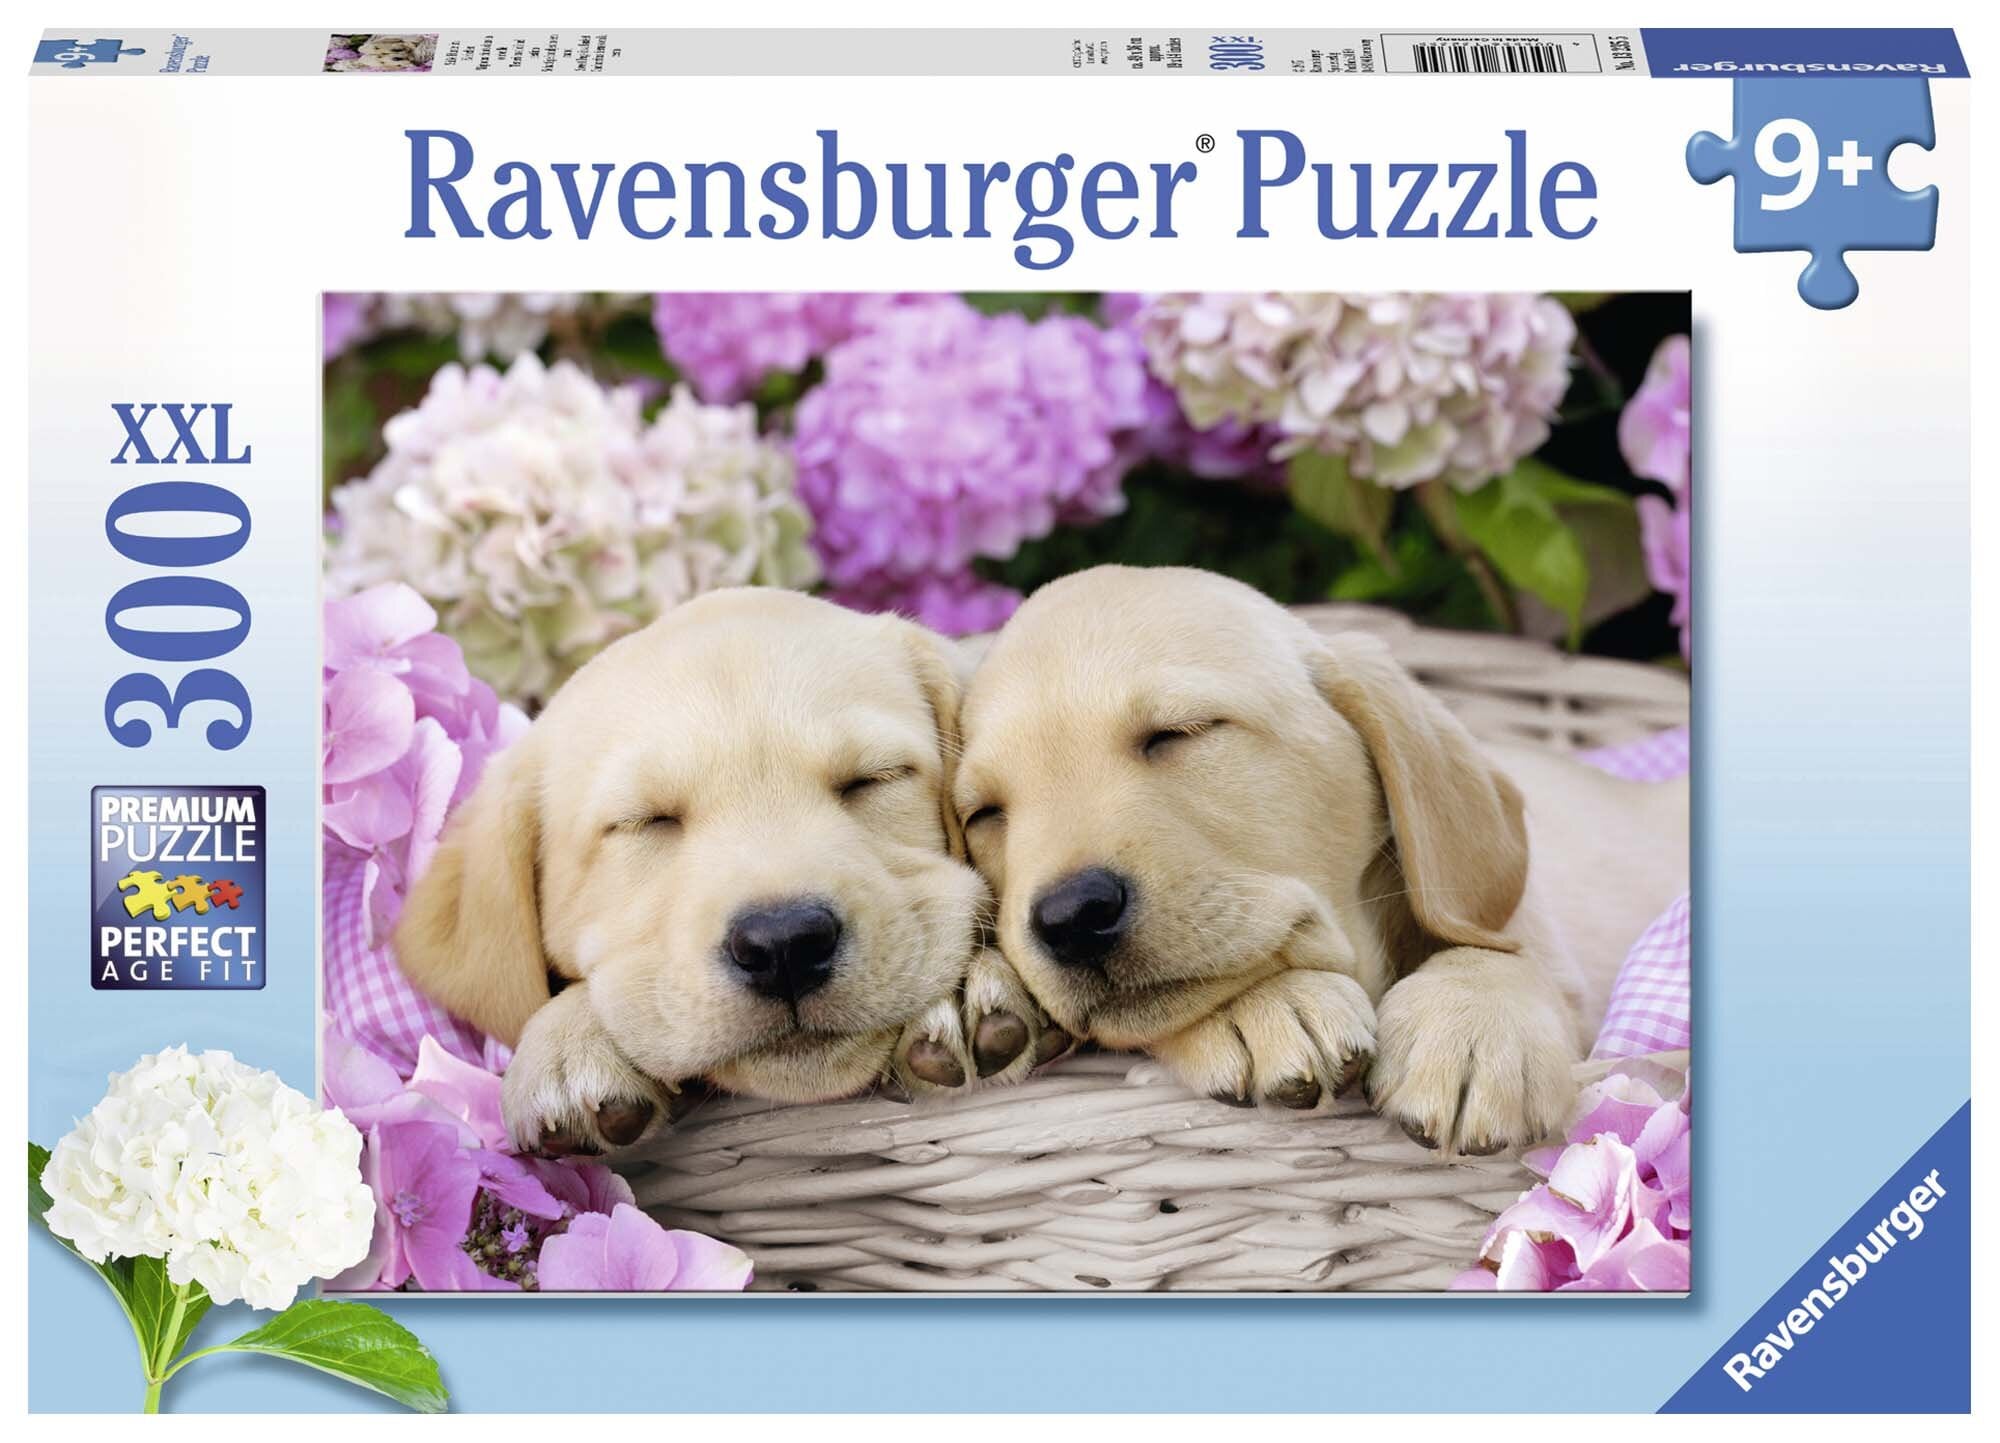 Ravensburger Puslespill, Sweet Dogs in a Basket 300 brikker XXL